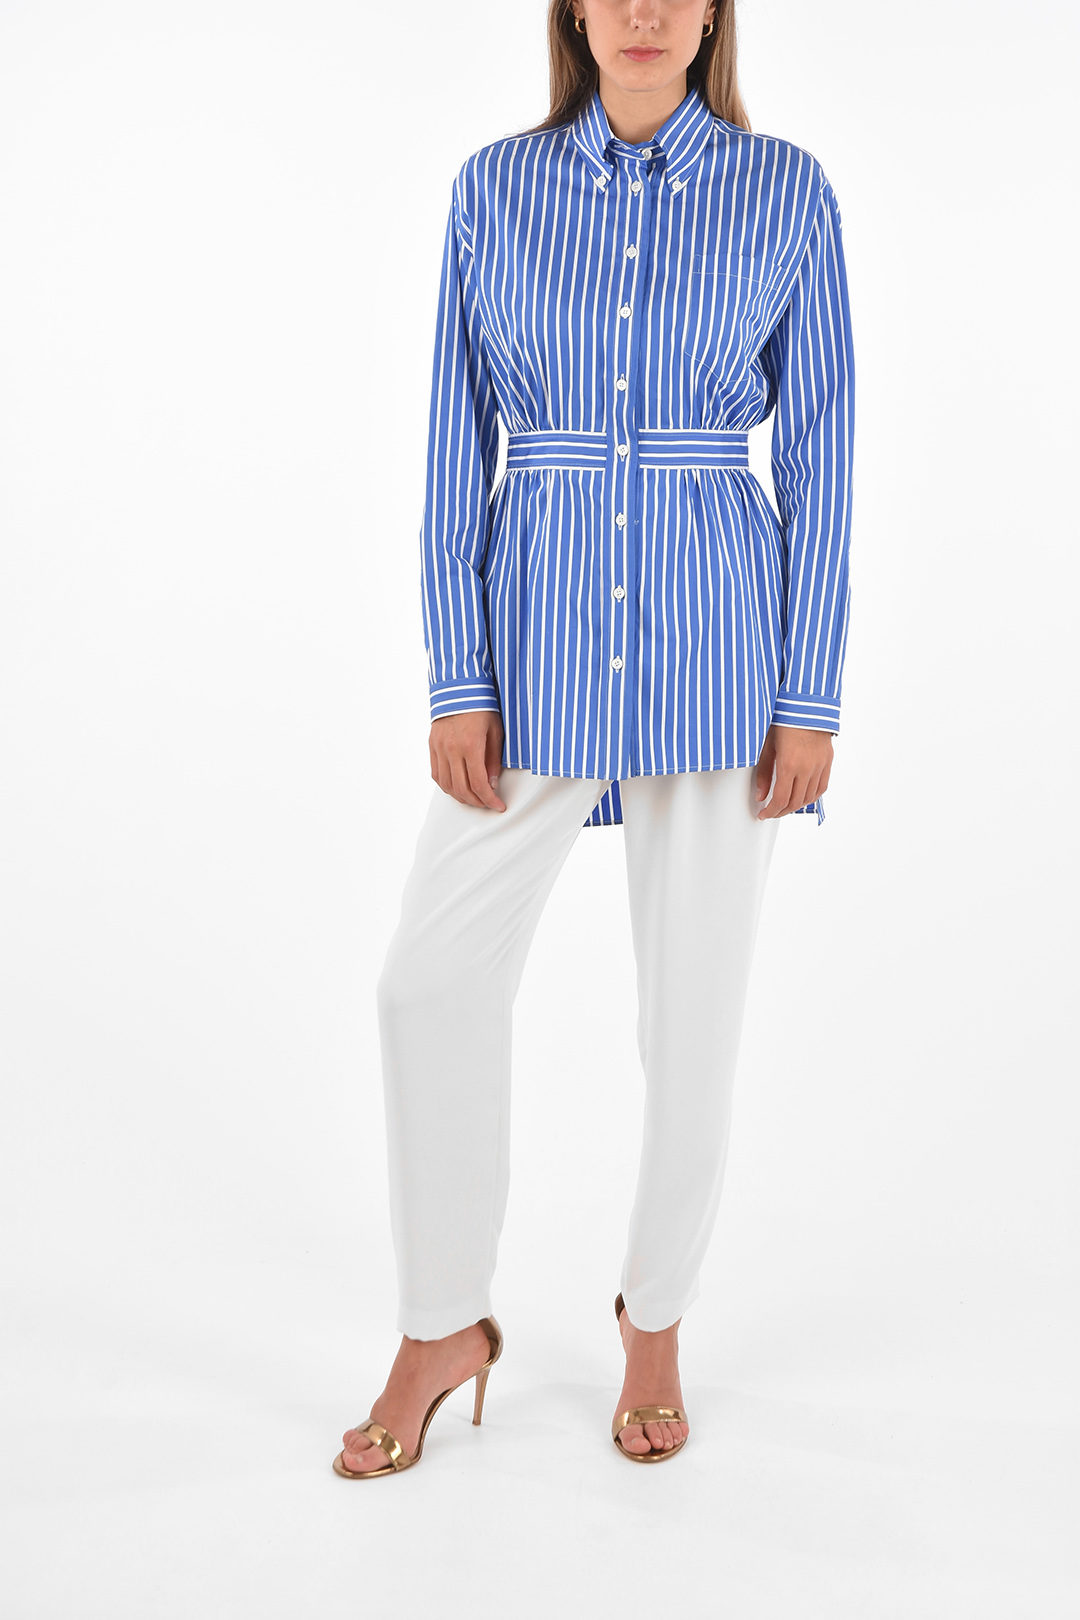 Prada awning striped button-down collar shirt women - Glamood Outlet